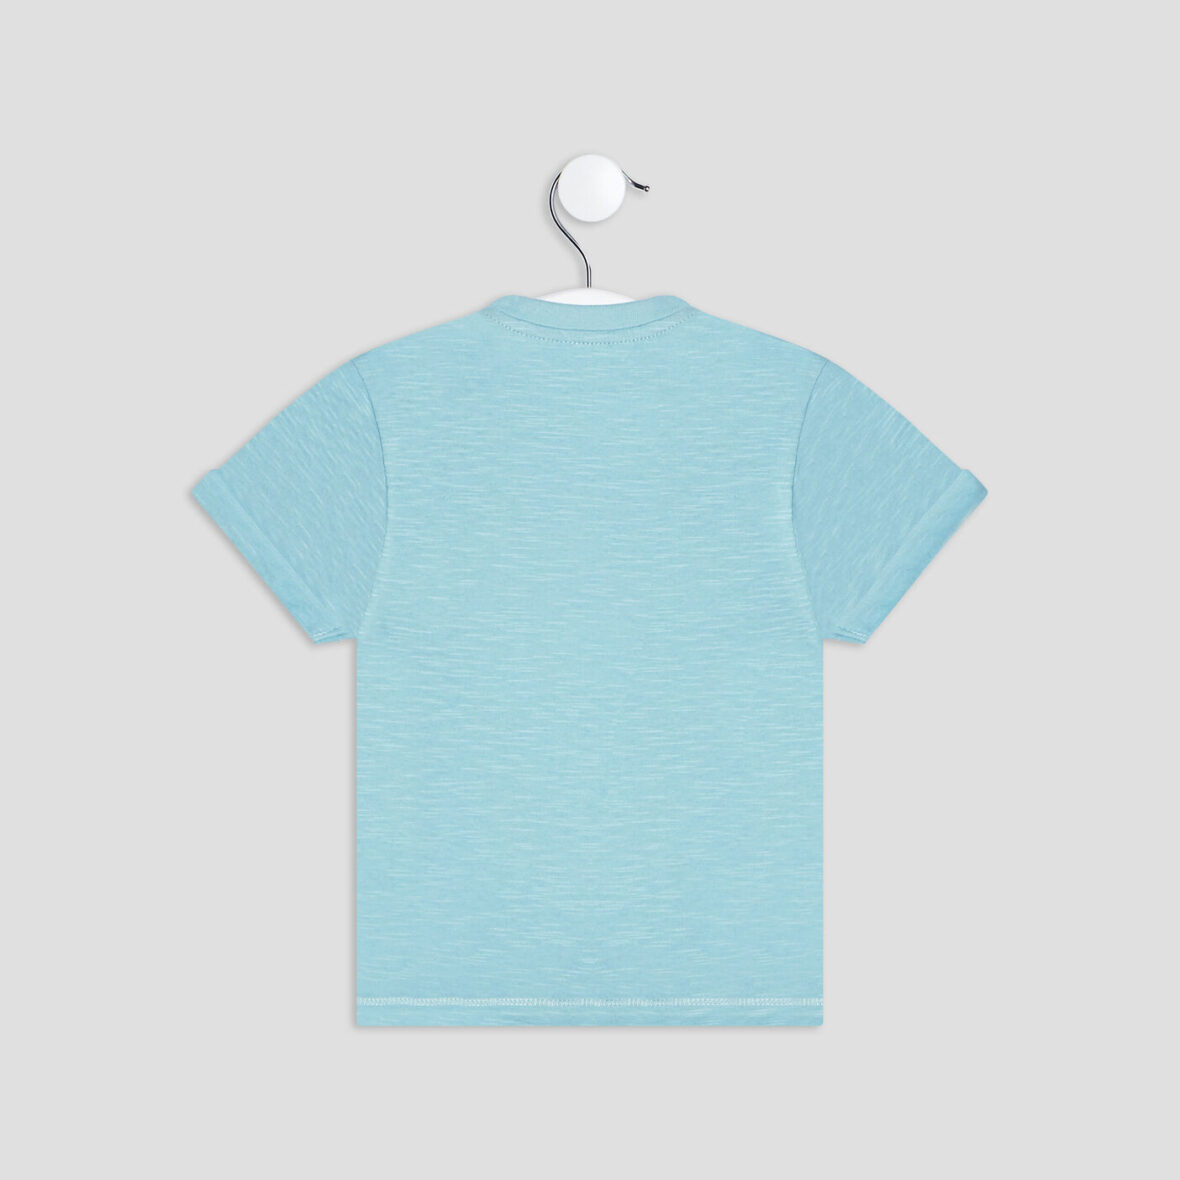 t-shirt-manches-courtes-bleu-turquoise-bebeg-a-36165600607171015